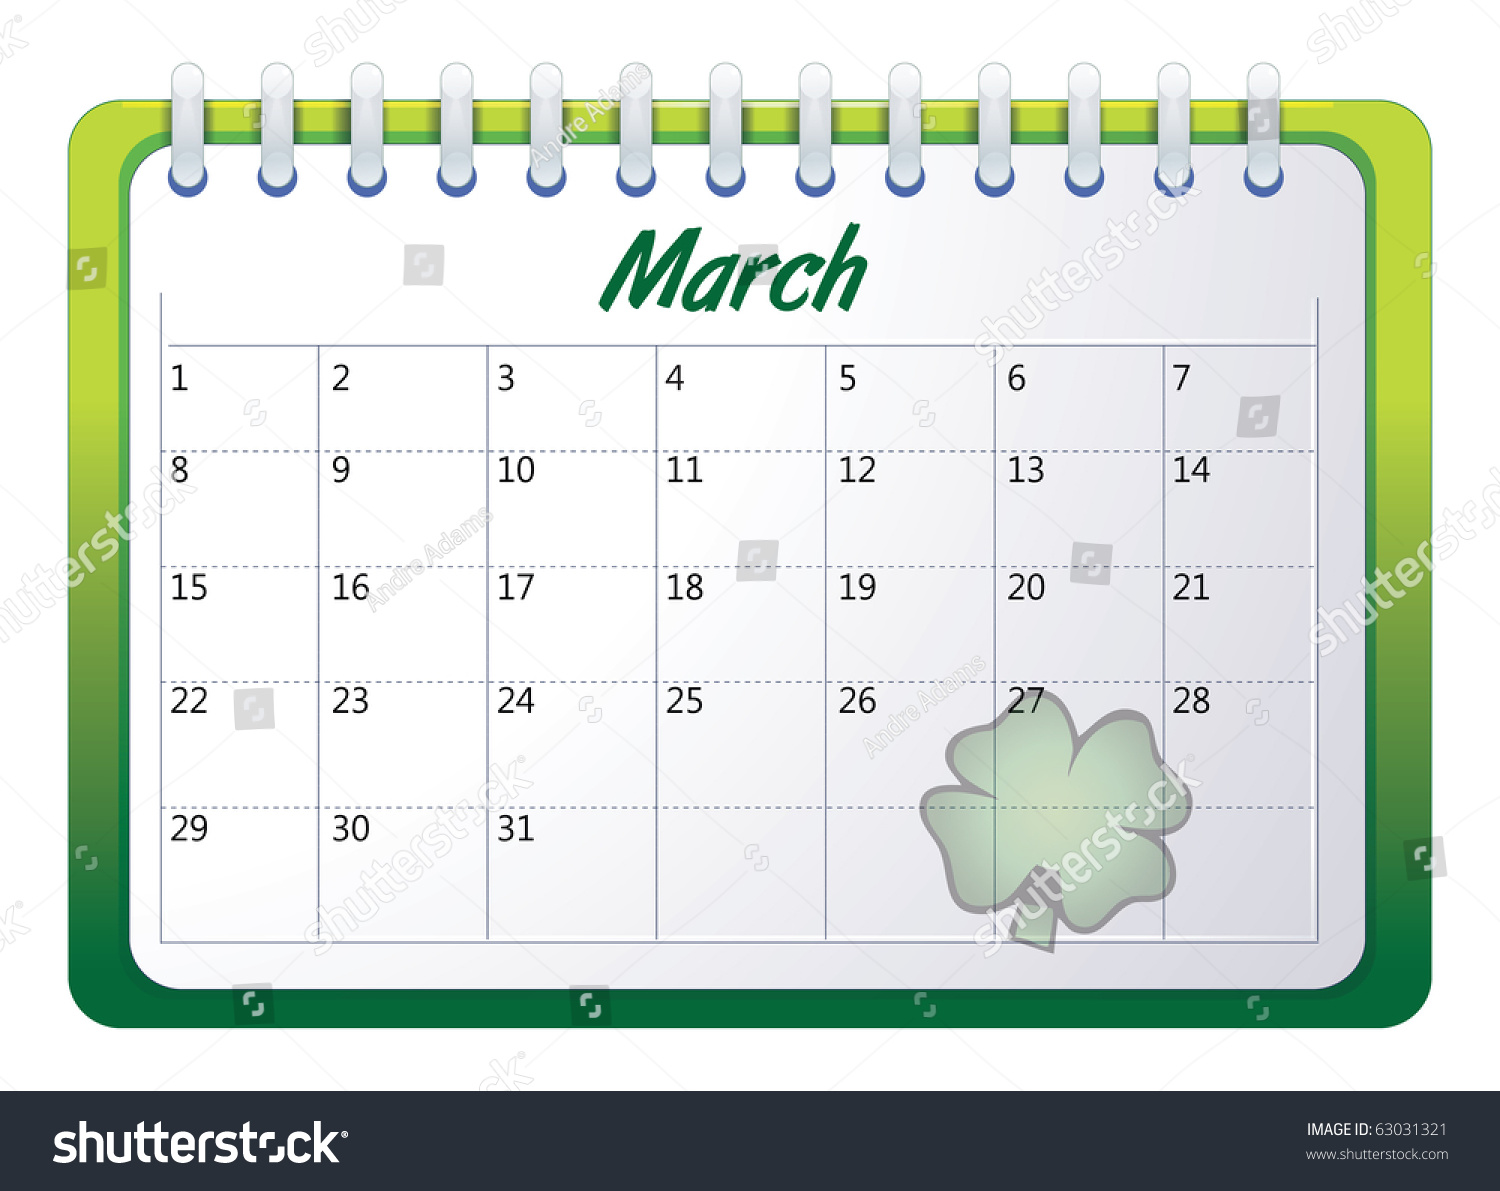 Cartoon Vector Illustration Of A Calendar March 63031321 Shutterstock